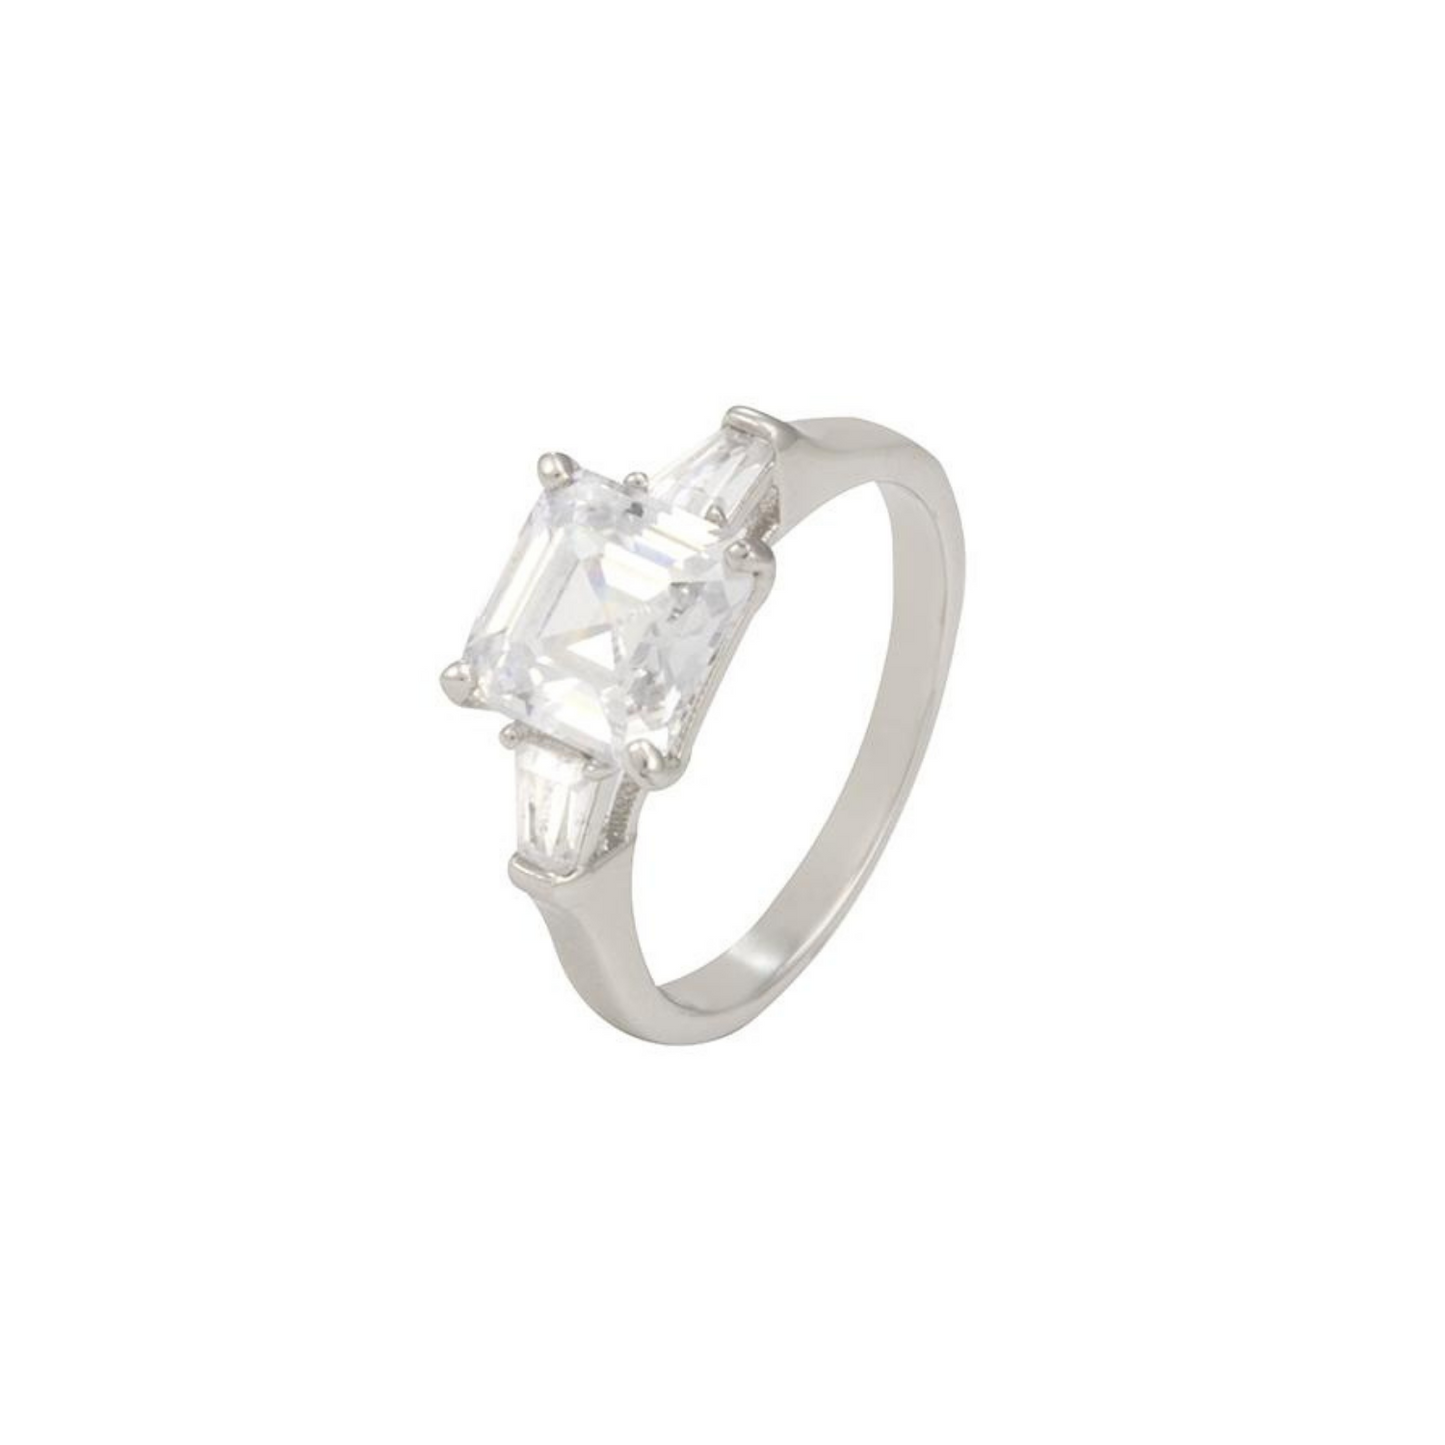 Zena 3 Ct. Princess Cut CZ Diamond Ring, Silver - Zahra Jewelry